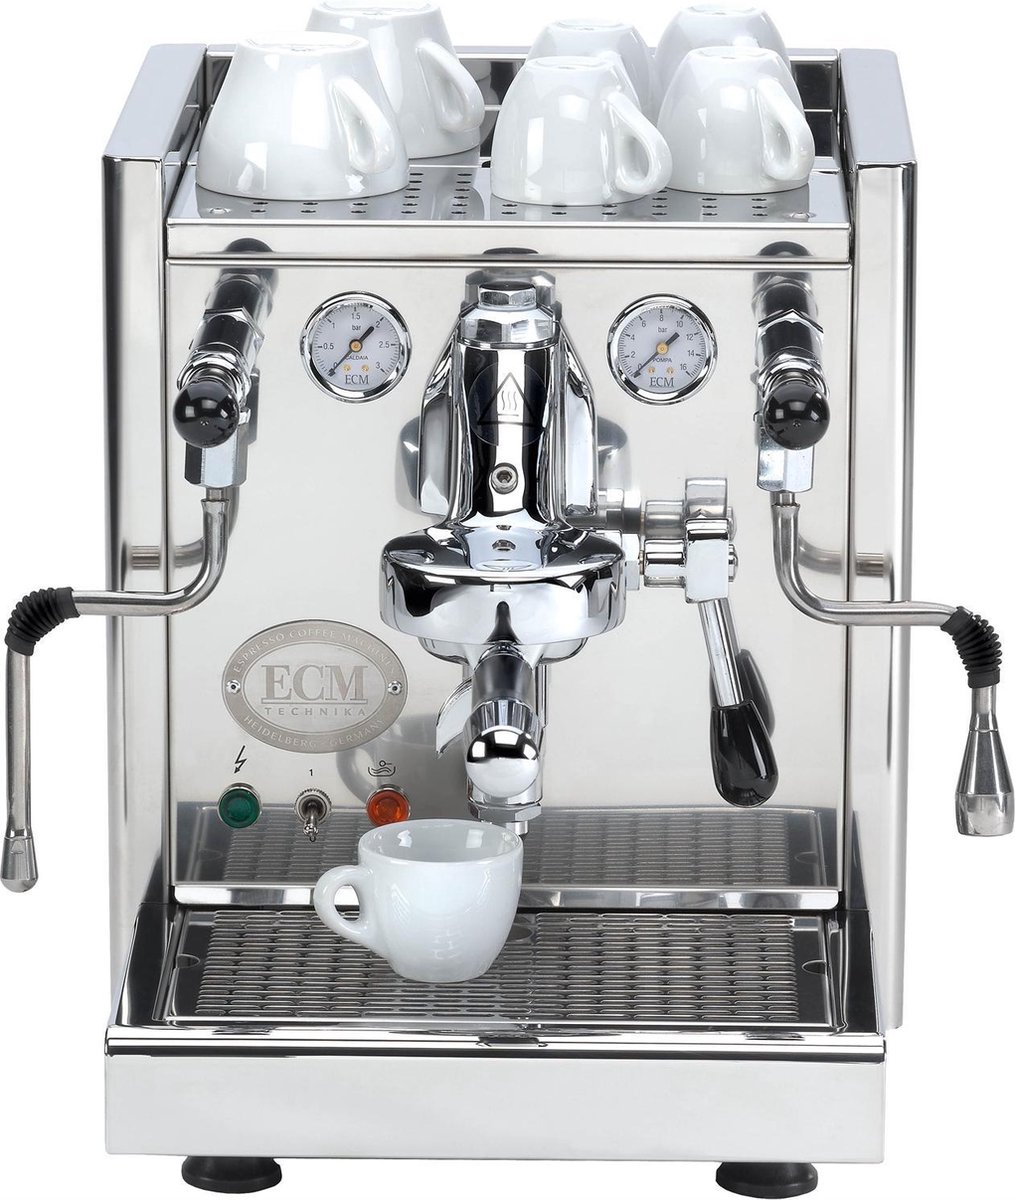 ECM Technika IV Profi - Handmatige Espressomachine | bol